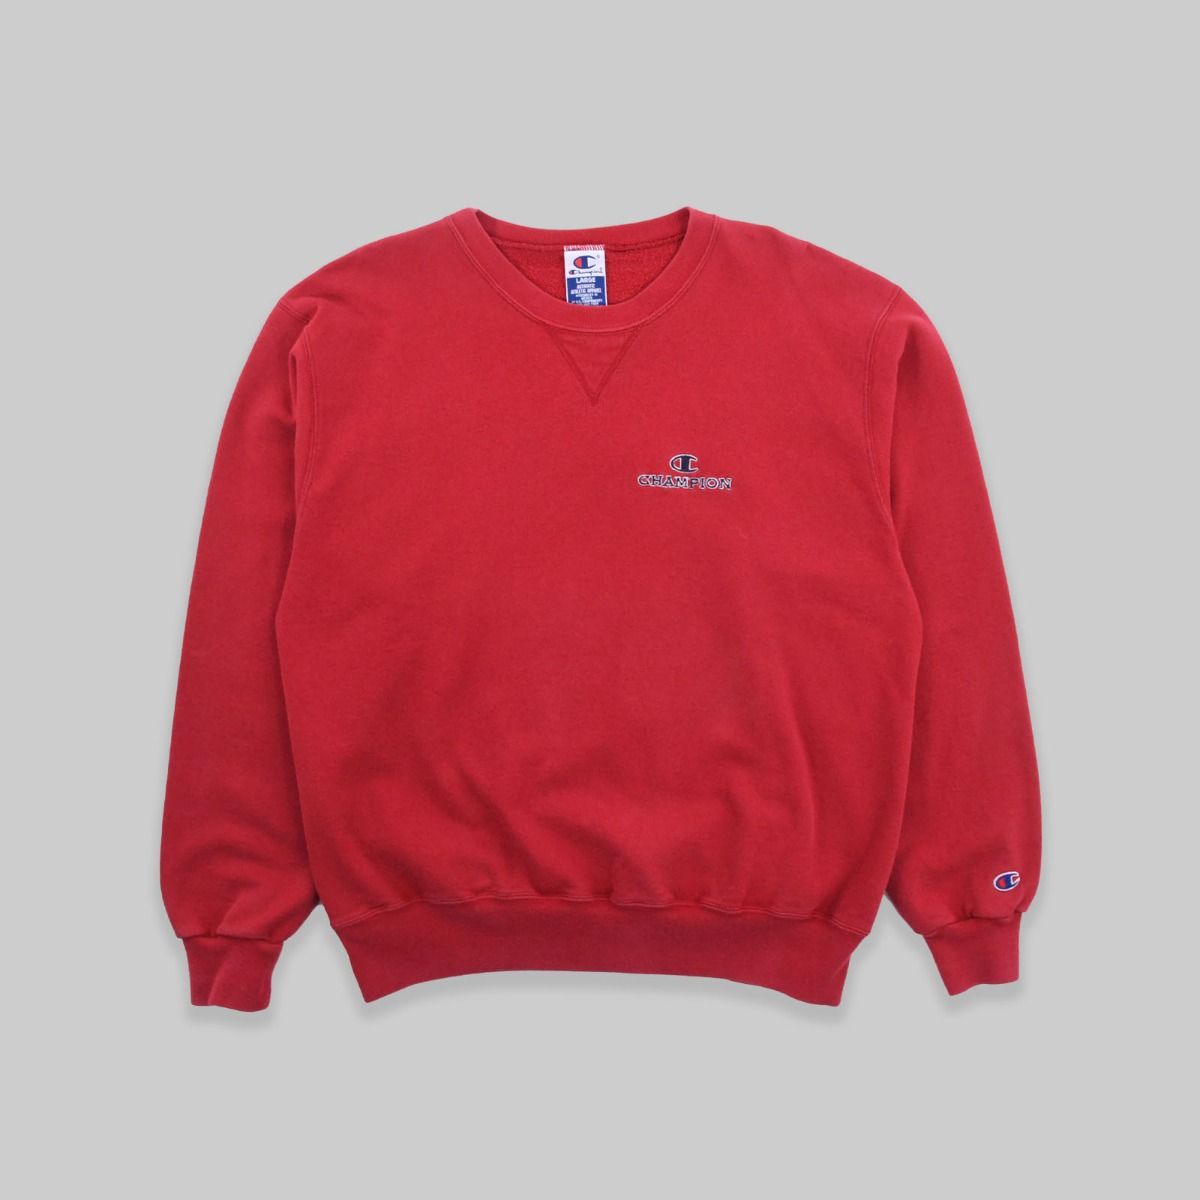 Champion 1990s Red Sweatshirt